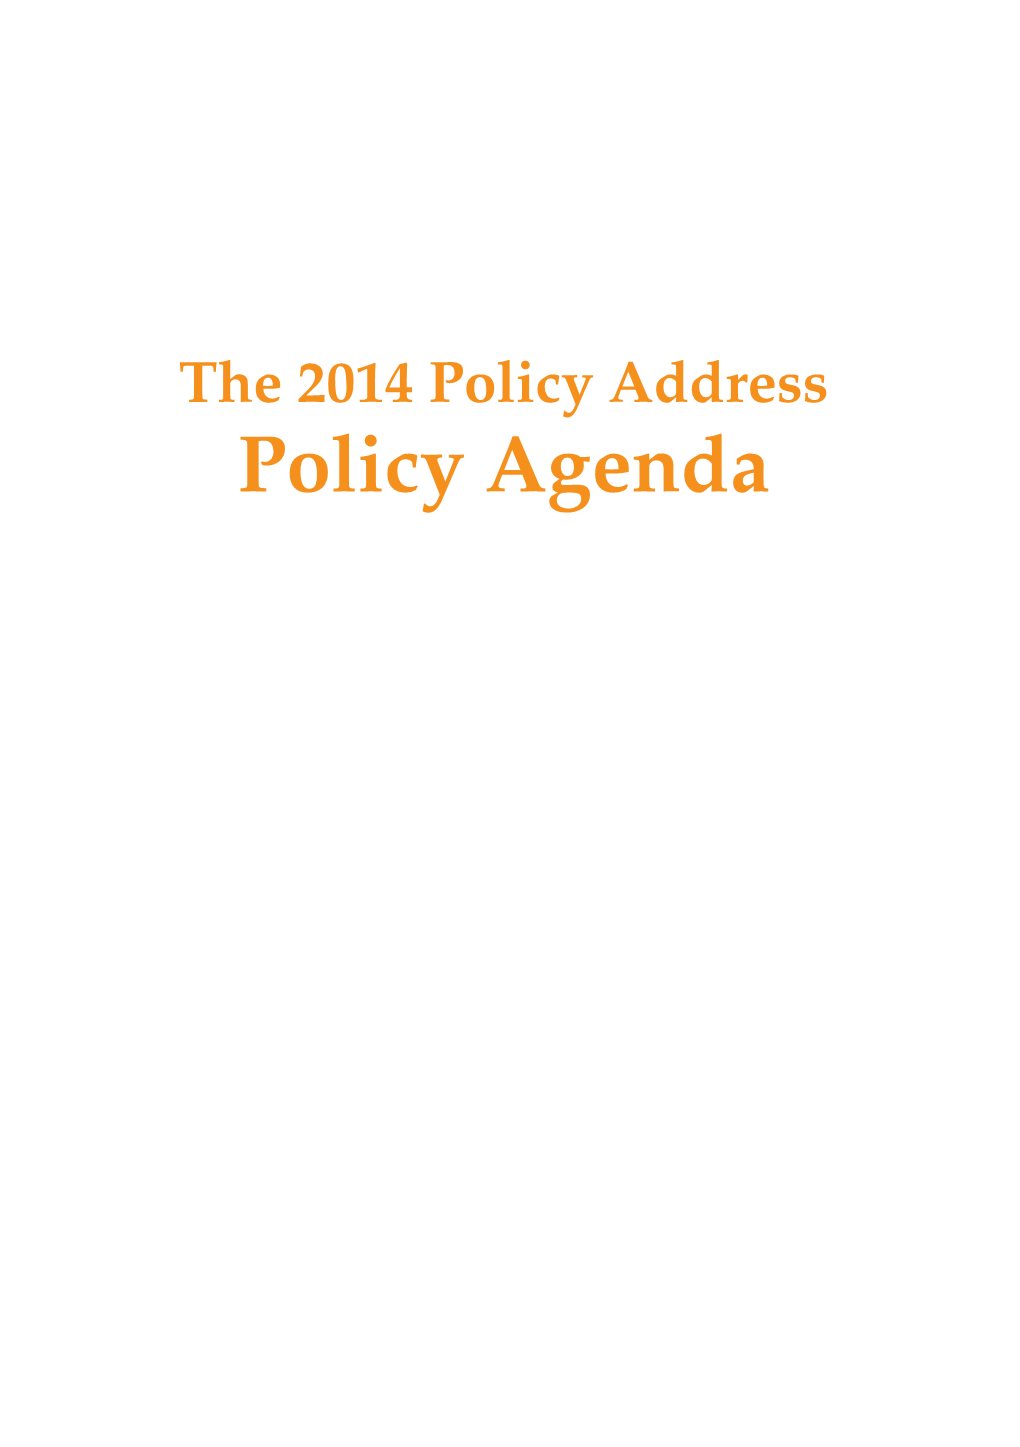 The 2014 Policy Address Policy Agenda